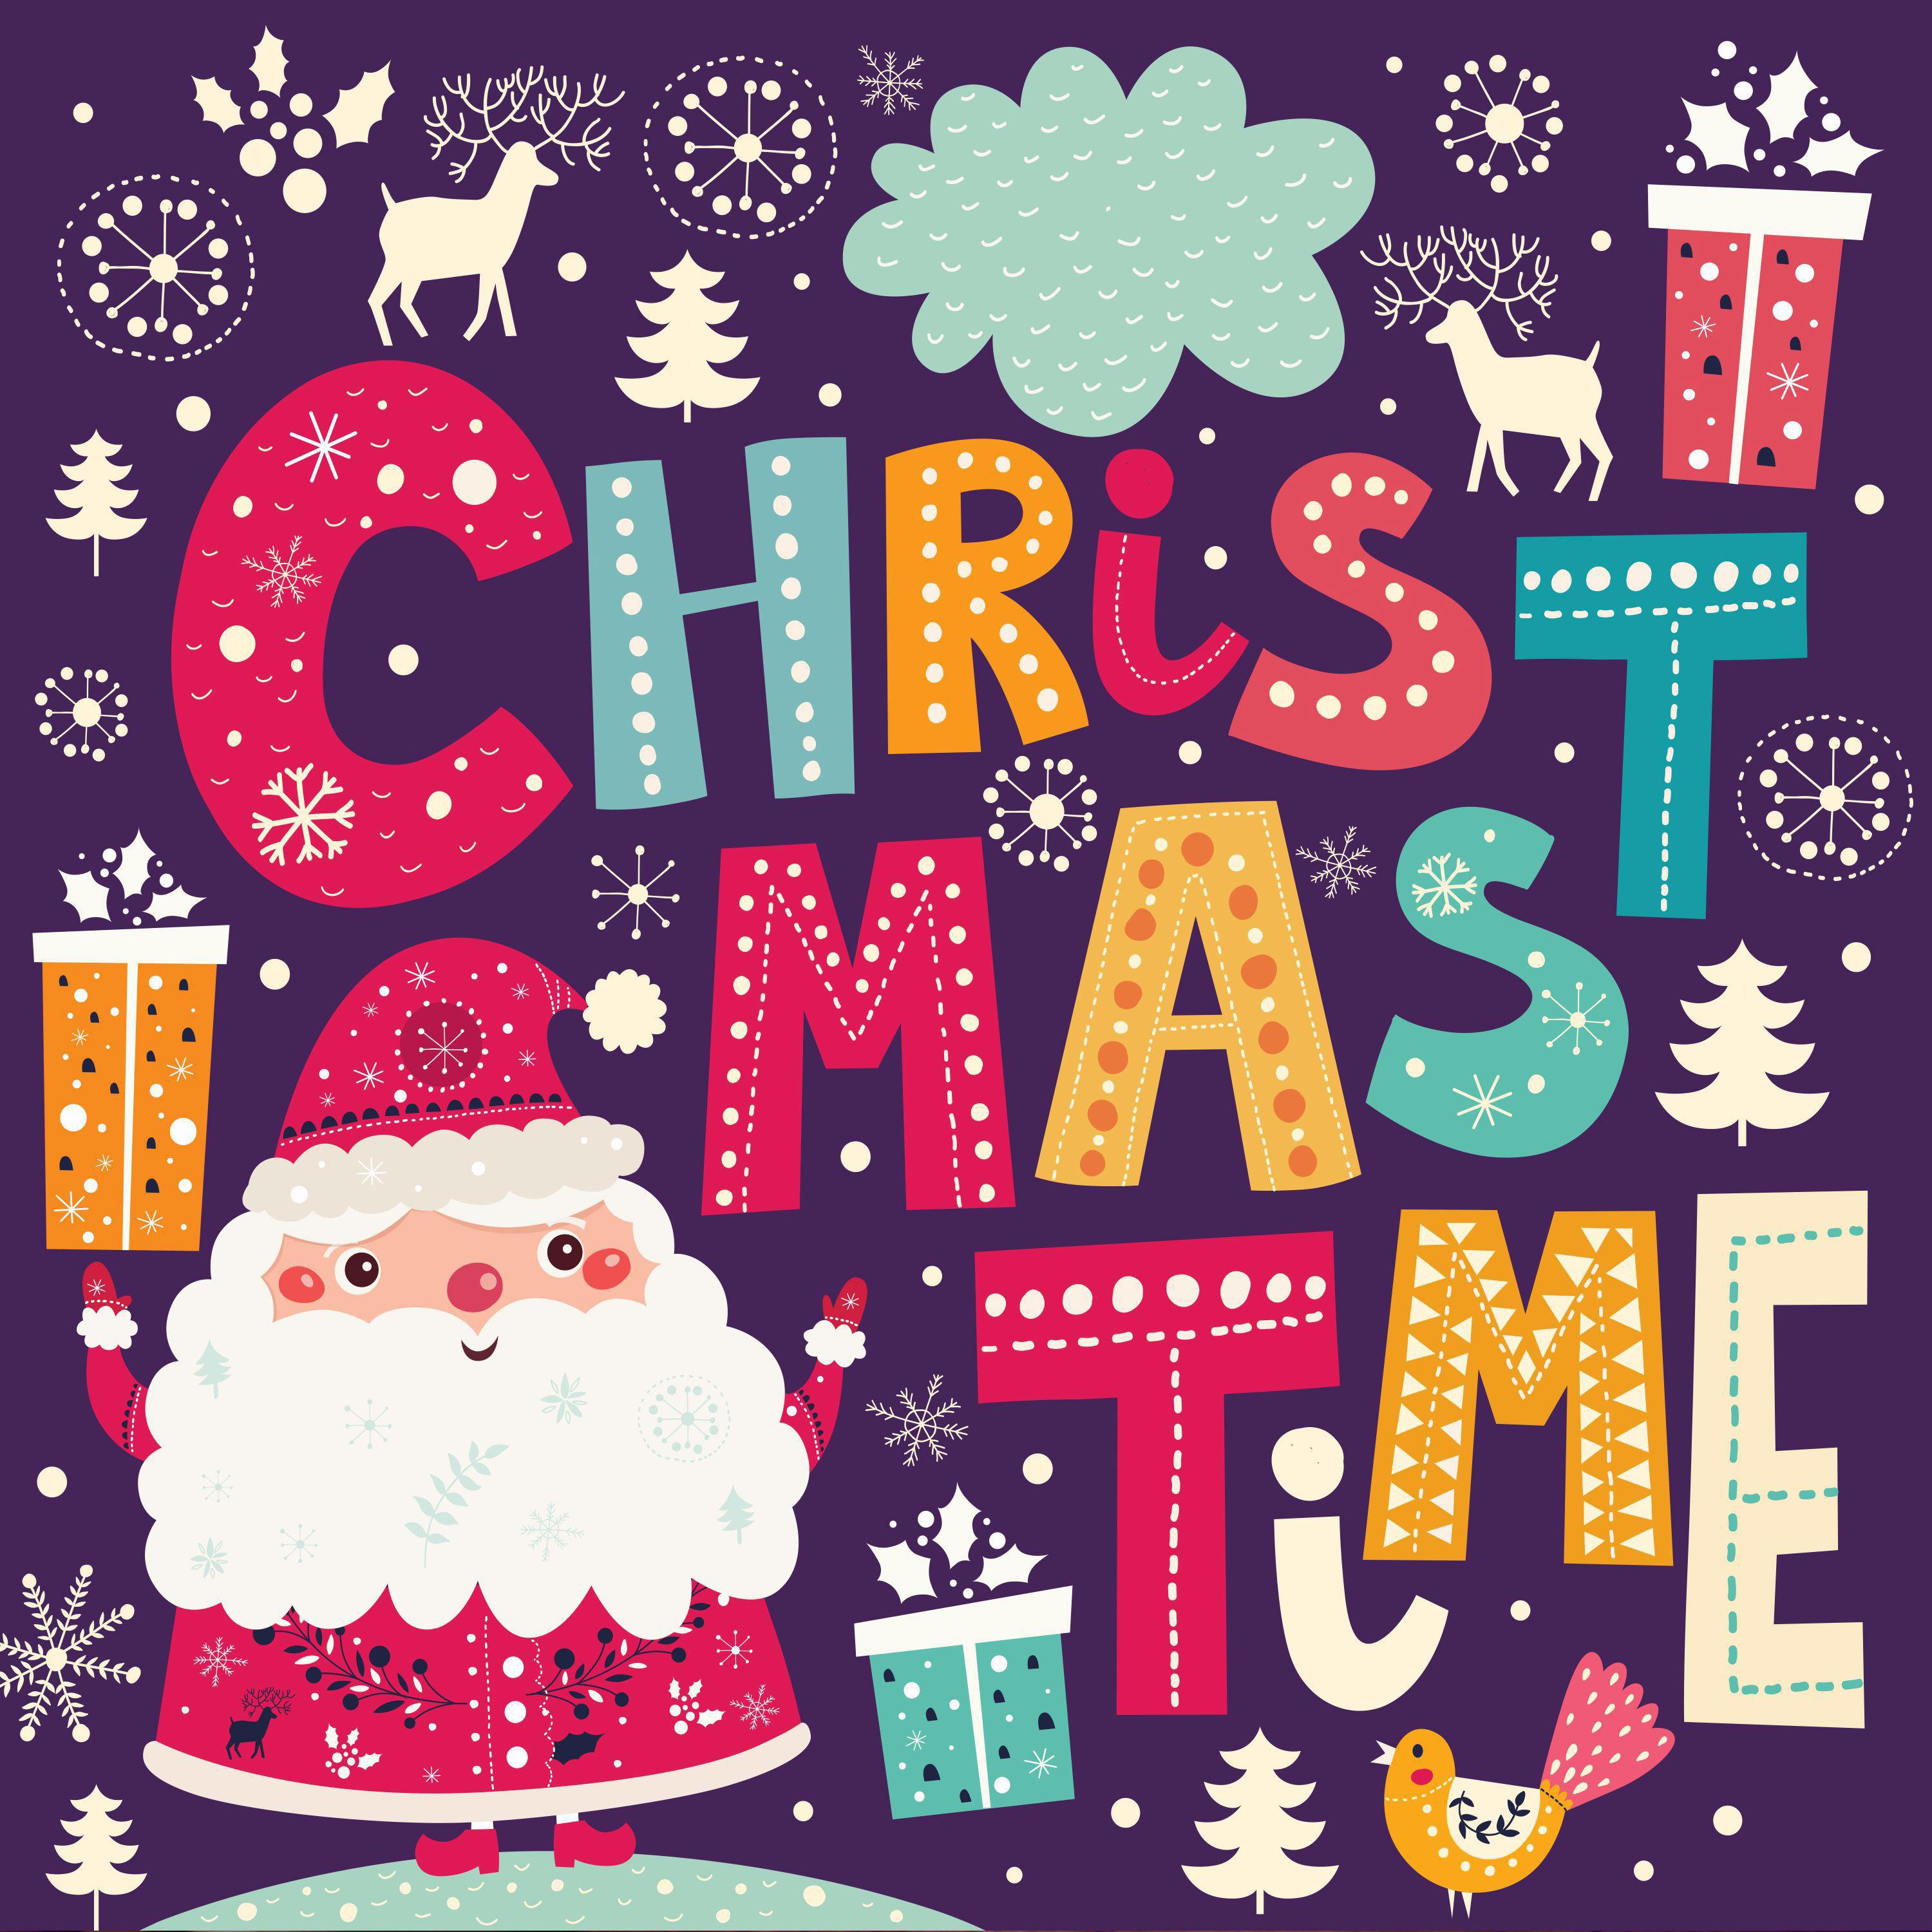 It's Christmas Time (Original 1961 Album - Digitally Remastered)